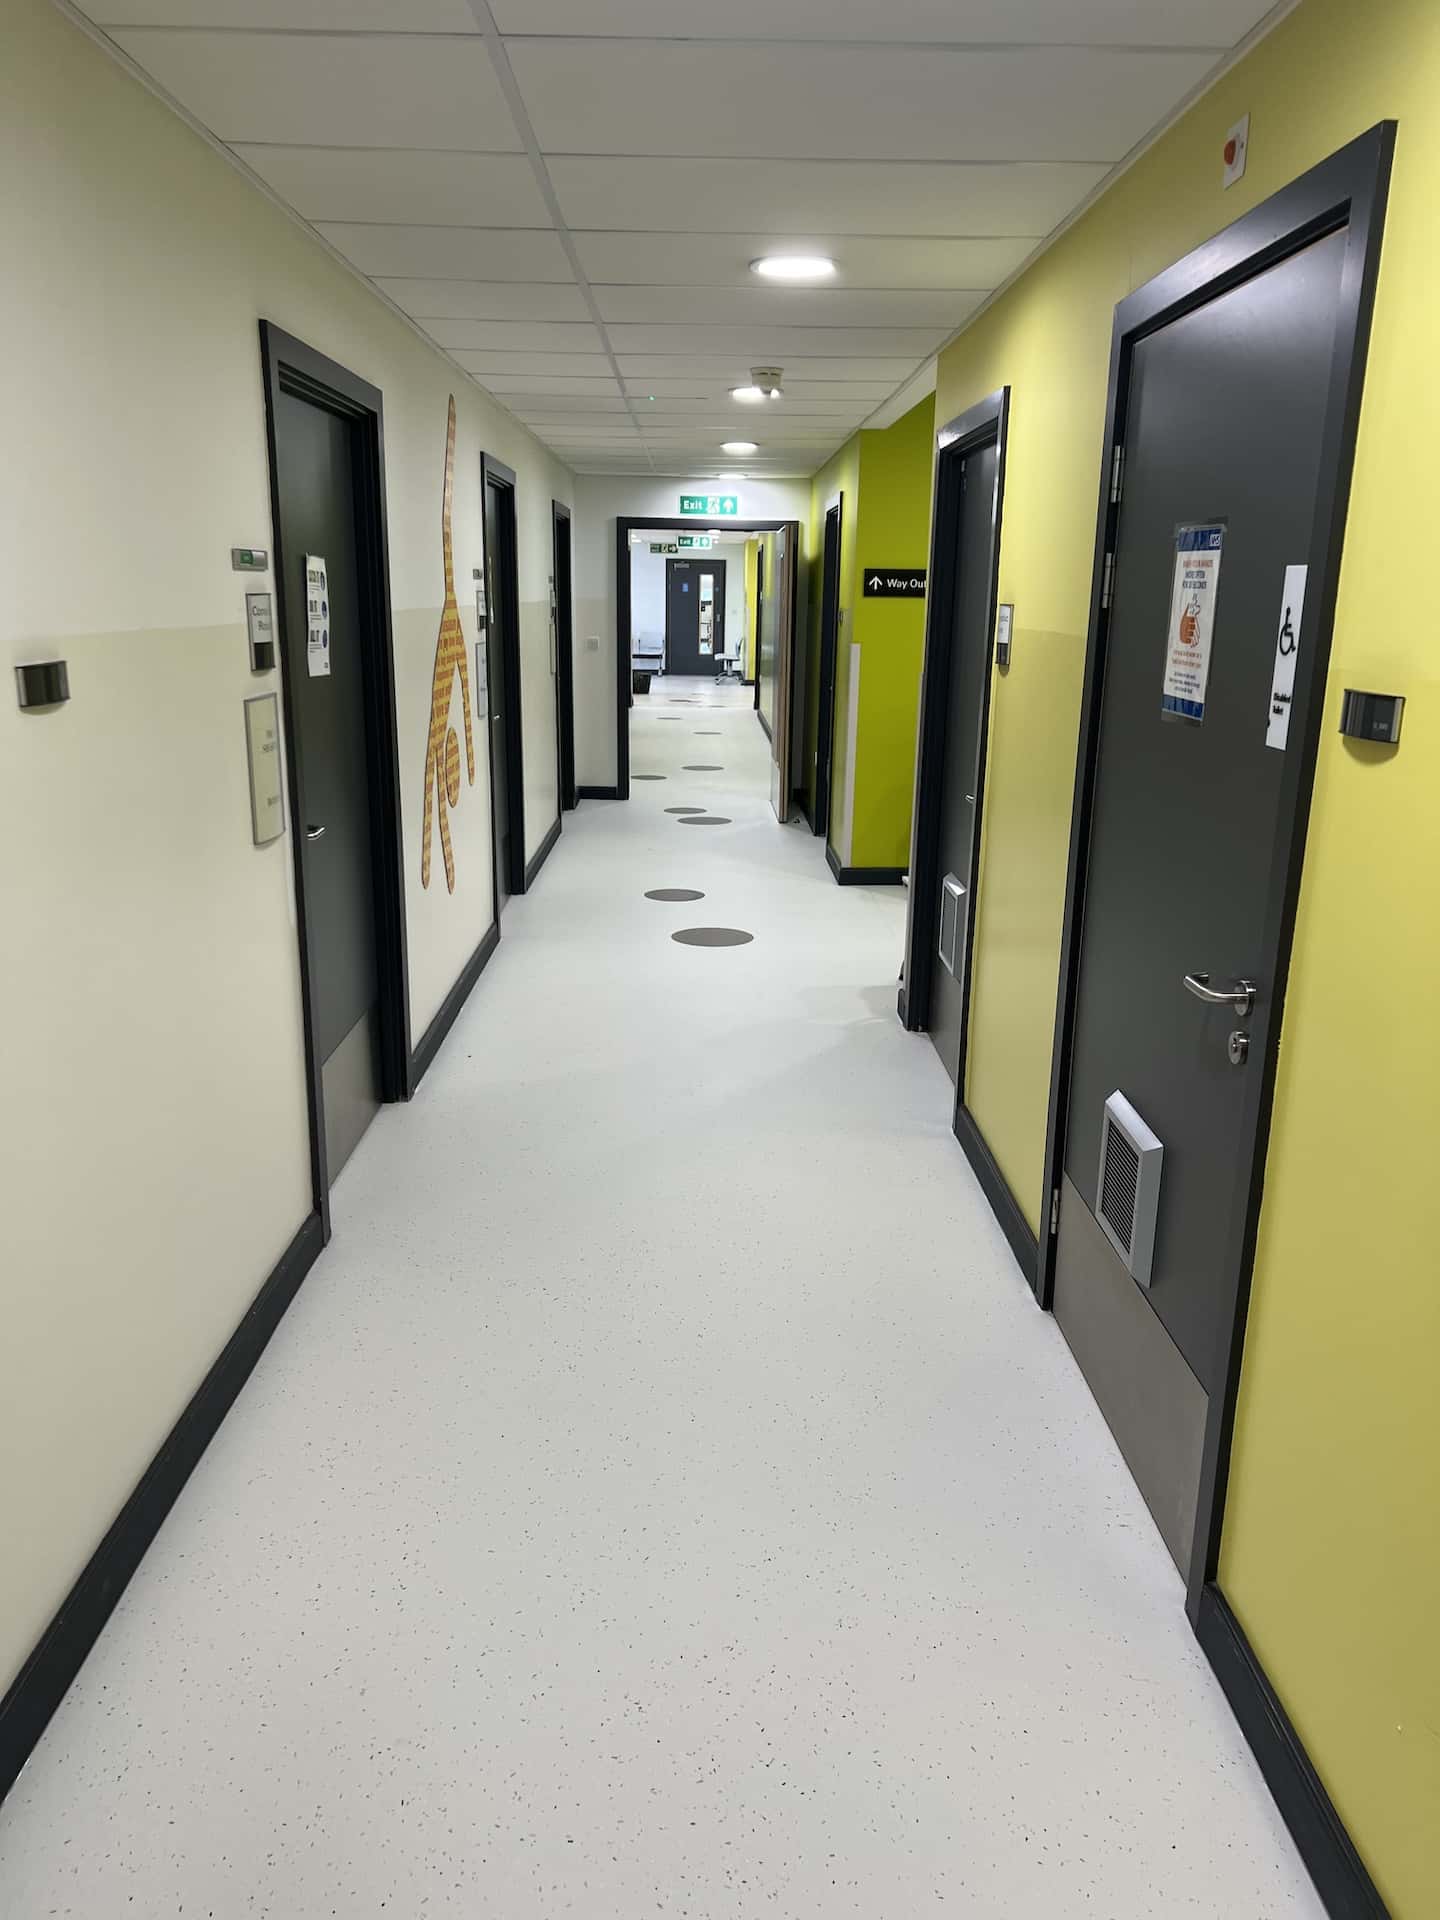 Brierley Hill Medical Centre - FLR safety flooring case study